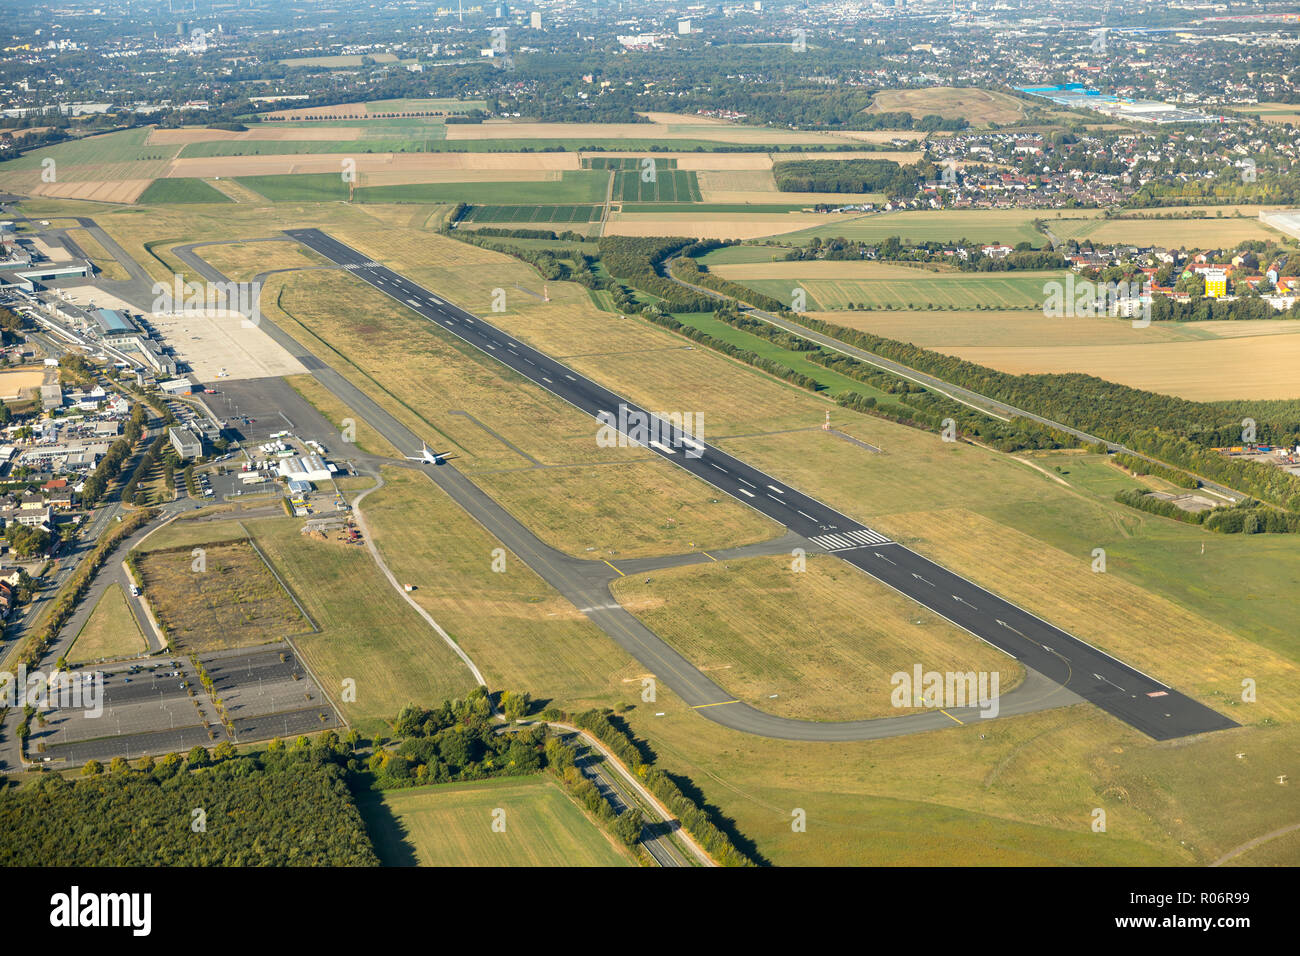 Airport Dortmund, runway 24, runway 24, noise problems, taxiways, Wickeder Chaussee, Dortmund, regional airport, airfield, airport,, Ruhrgebiet, North Stock Photo